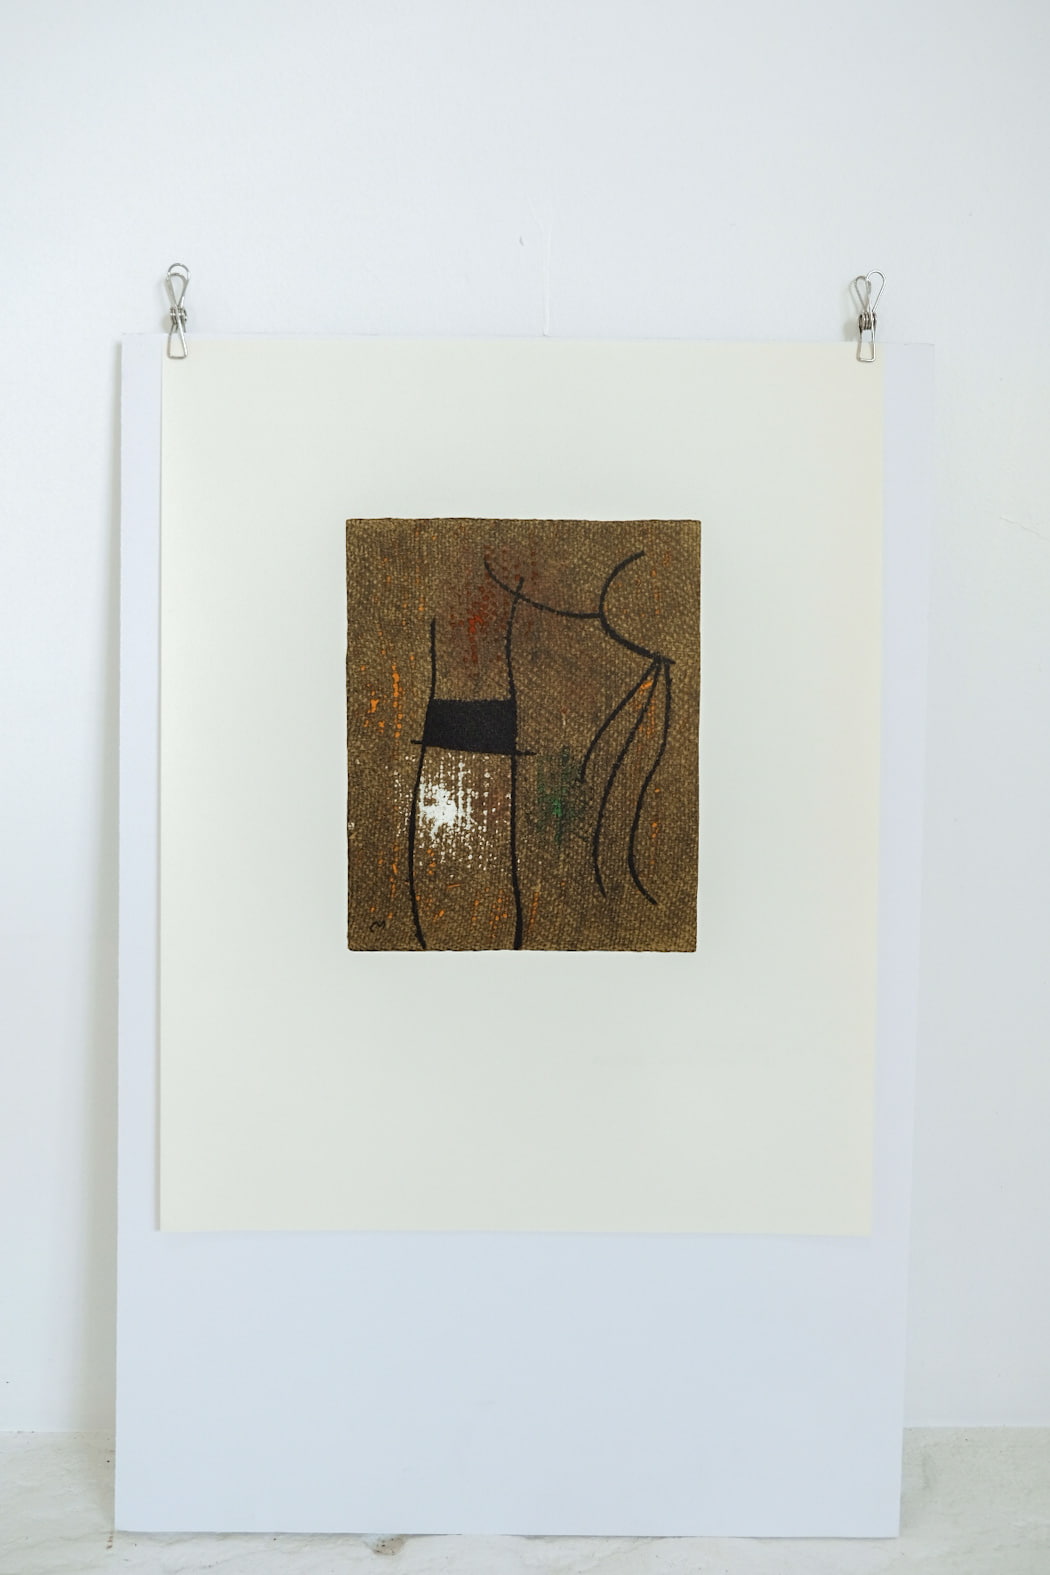 Joan Miro FEMME IV/VI Plate #4